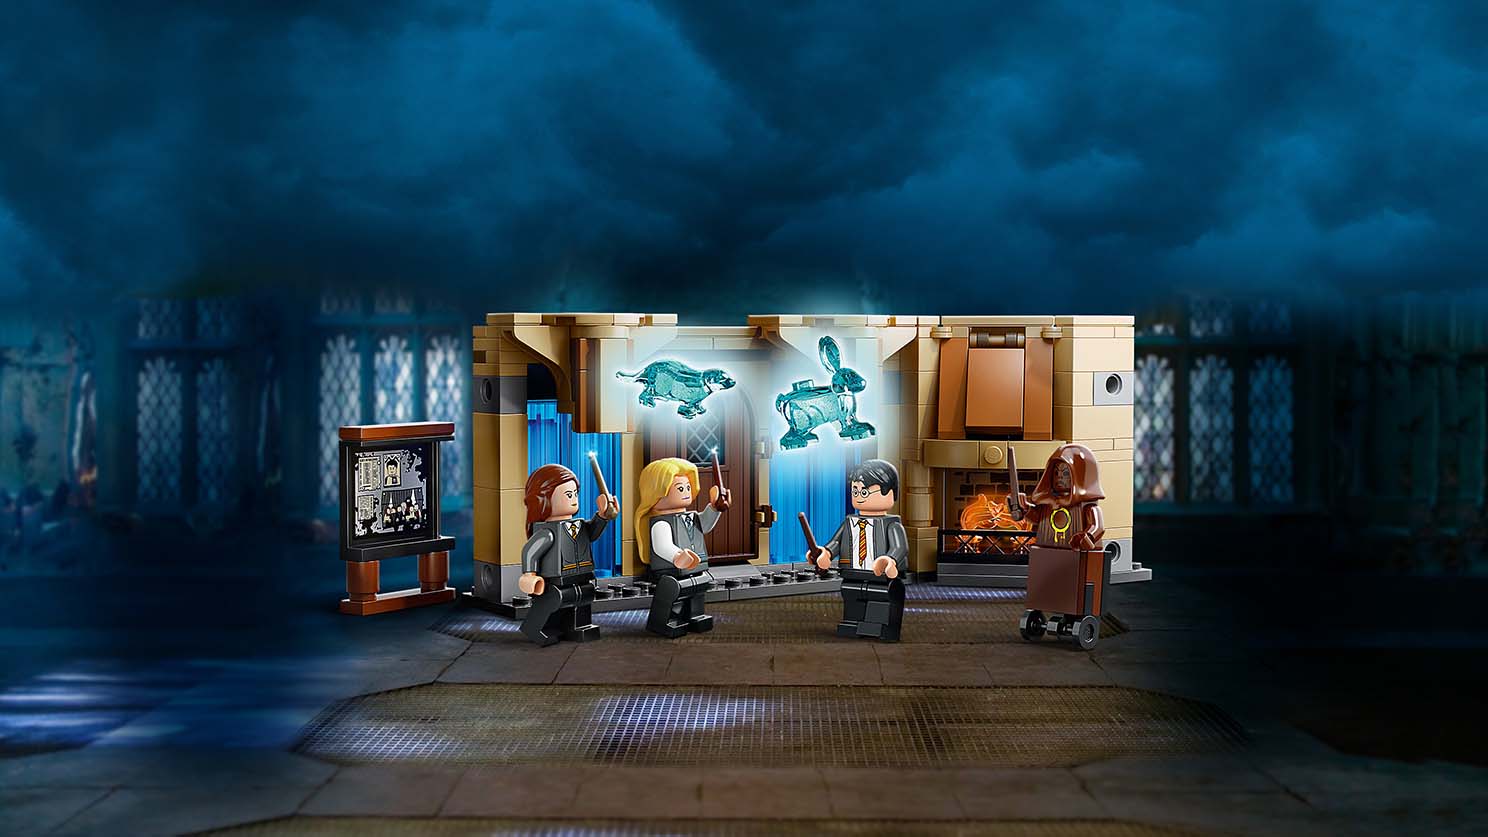 LEGO® Harry Potter Hogwarts: Room of Requirement - LEGO